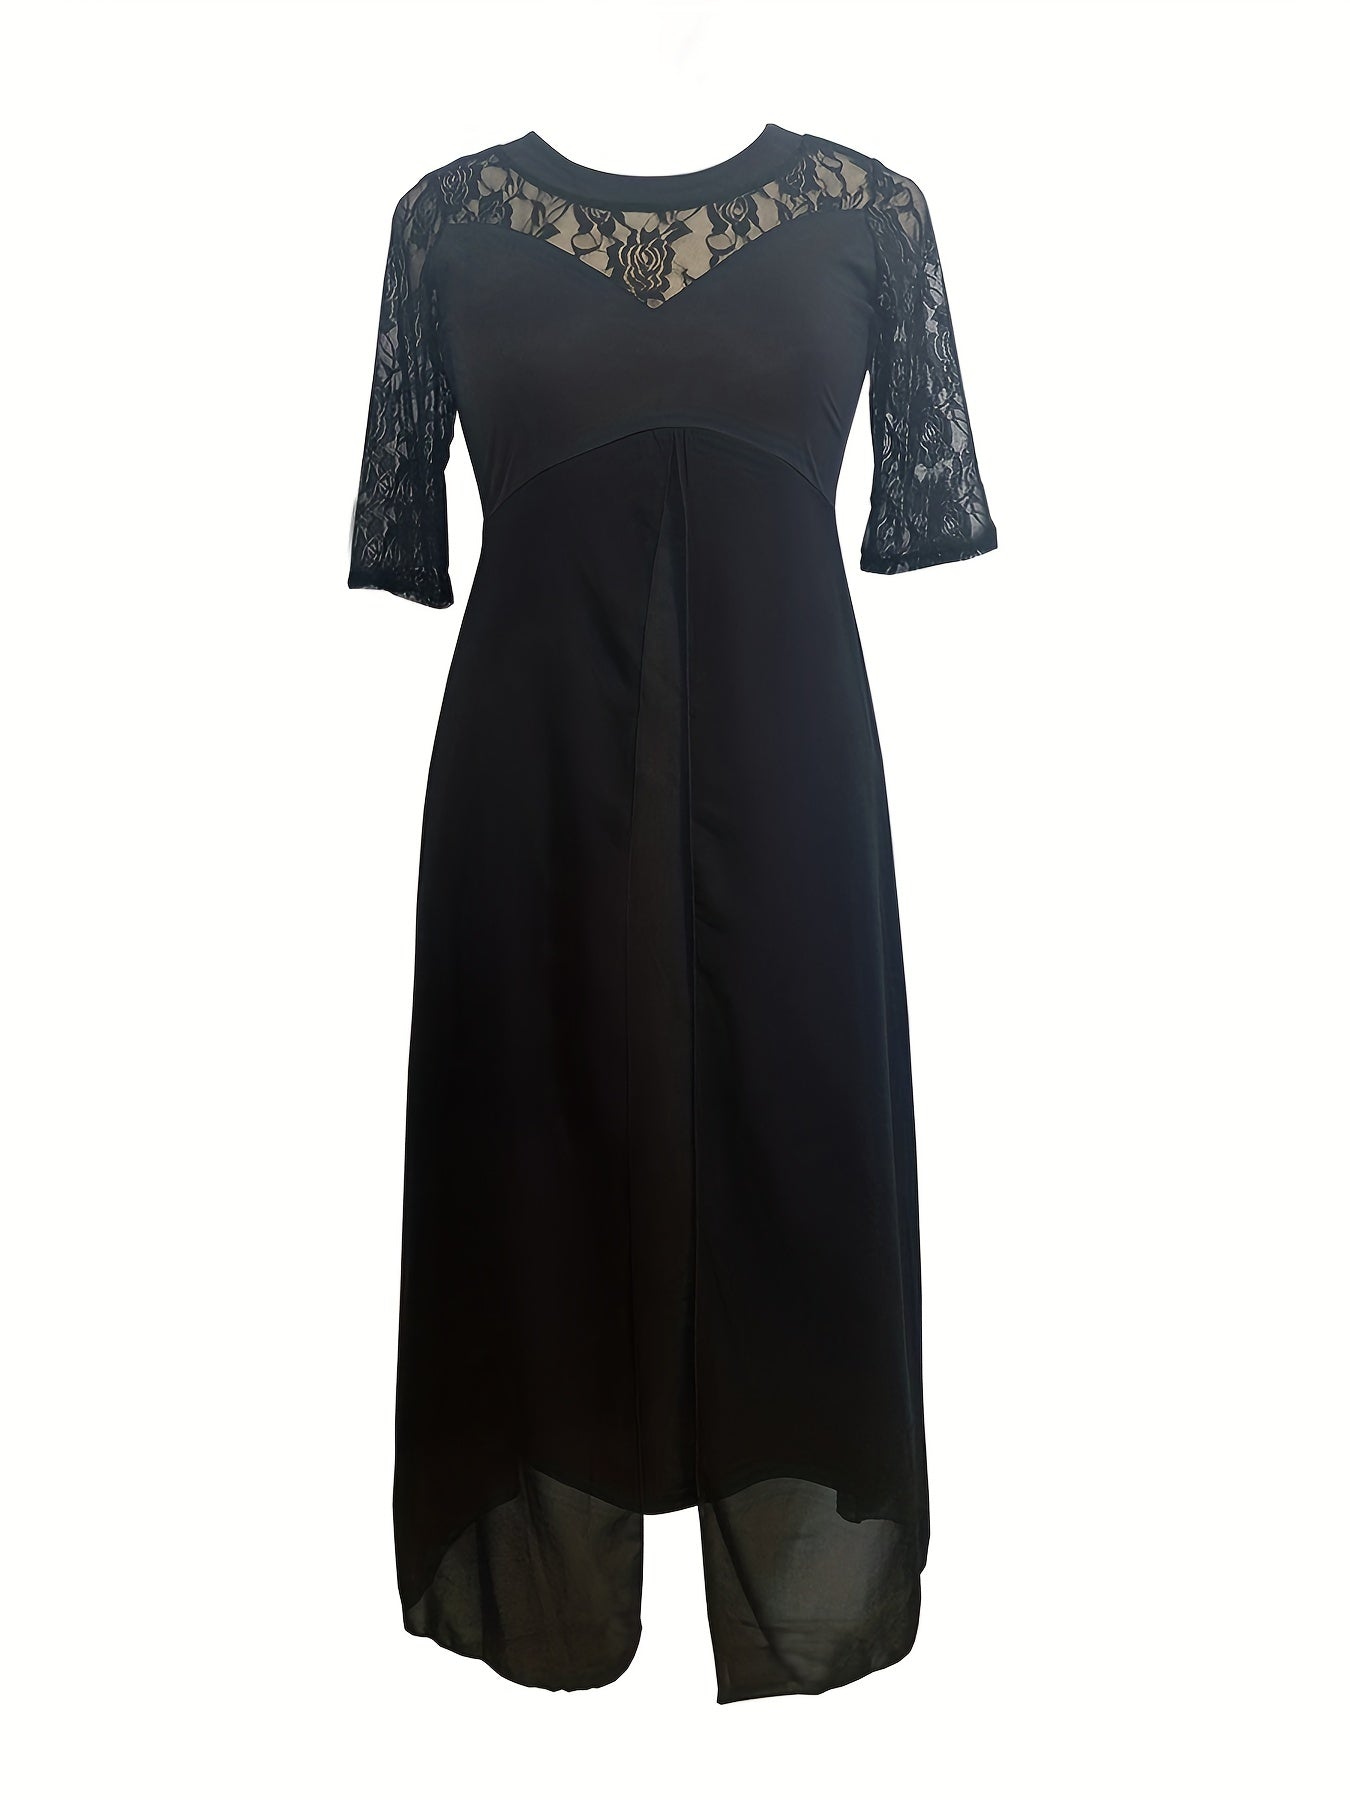 Antmvs Plus Size Casual Dress, Women's Plus Solid Contrast Lace Long Sleeve Round Neck Maxi Dress